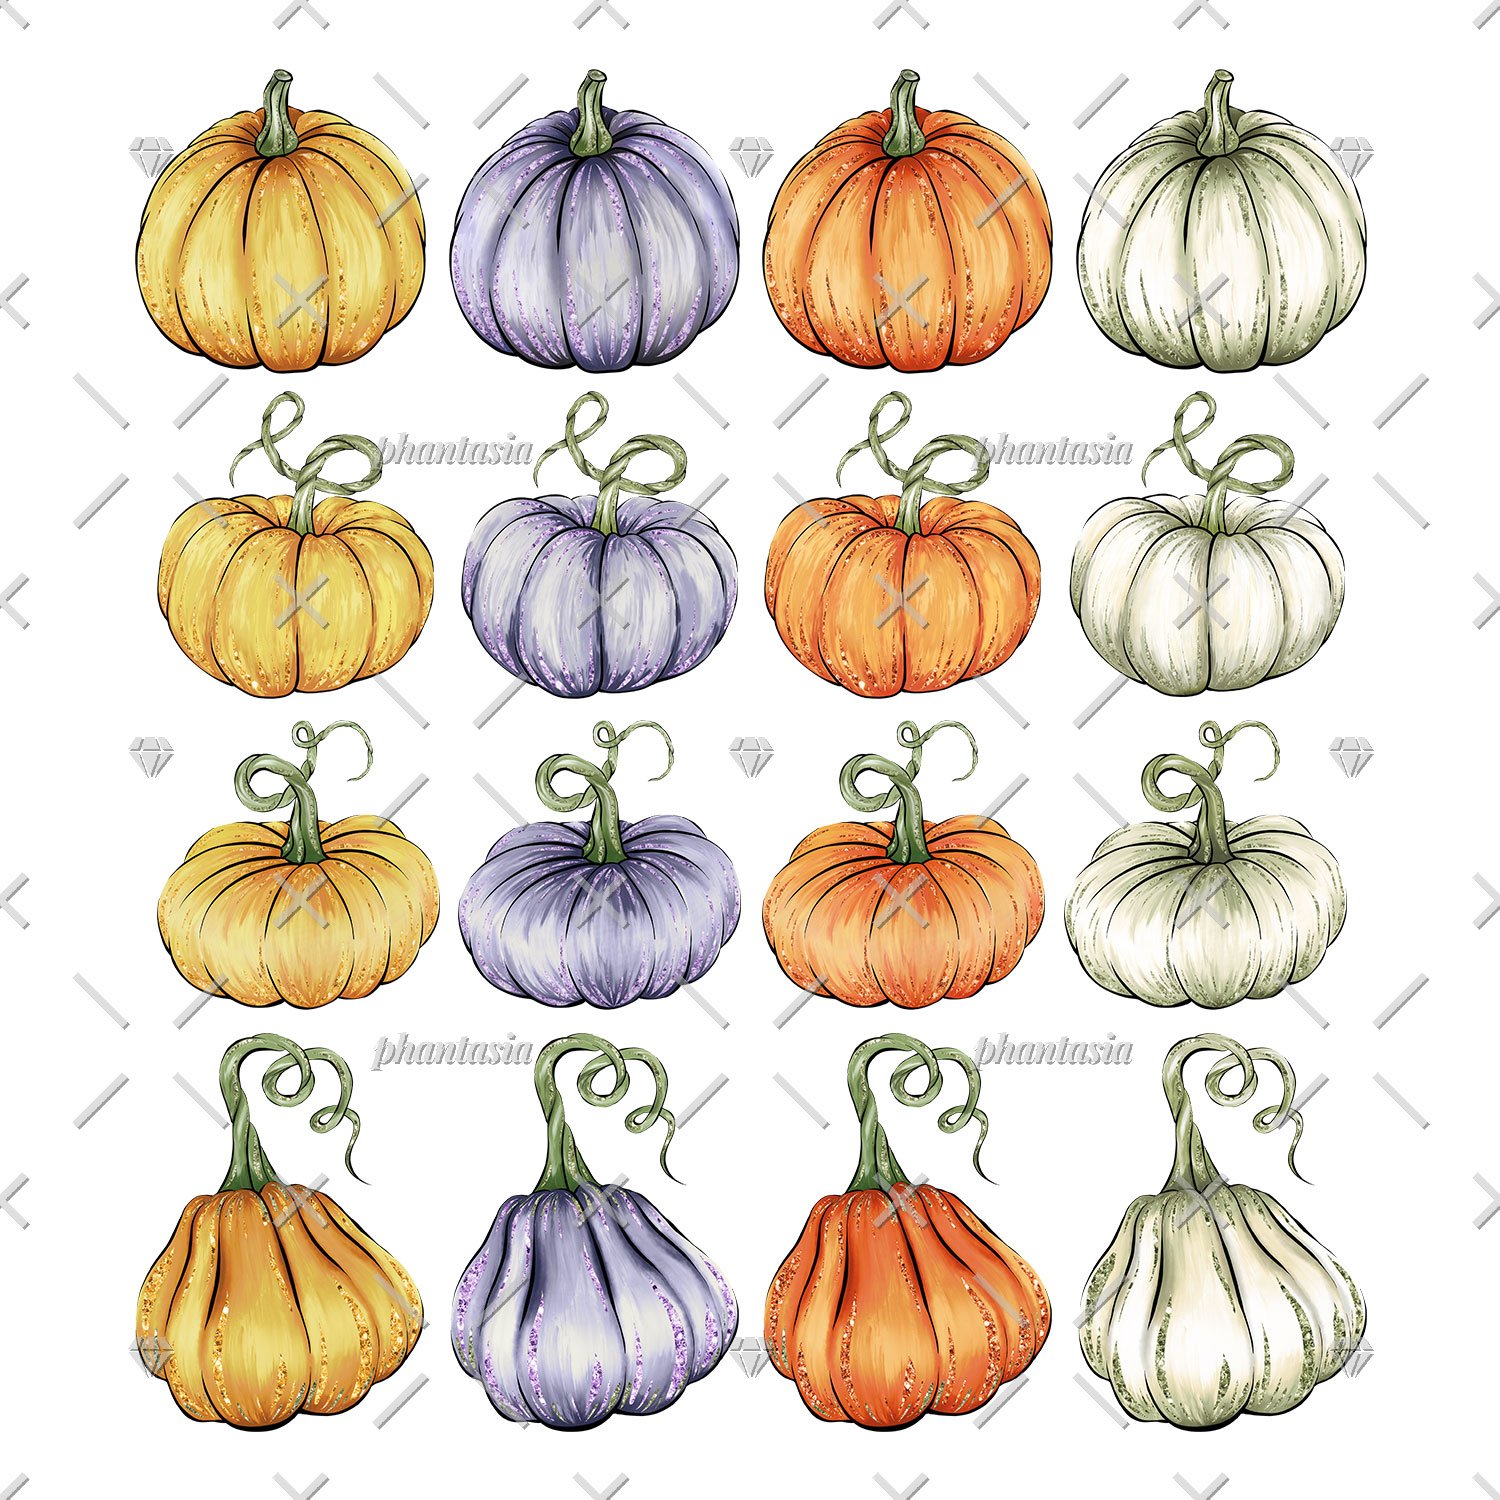 Diverse of colorful pumpkin.